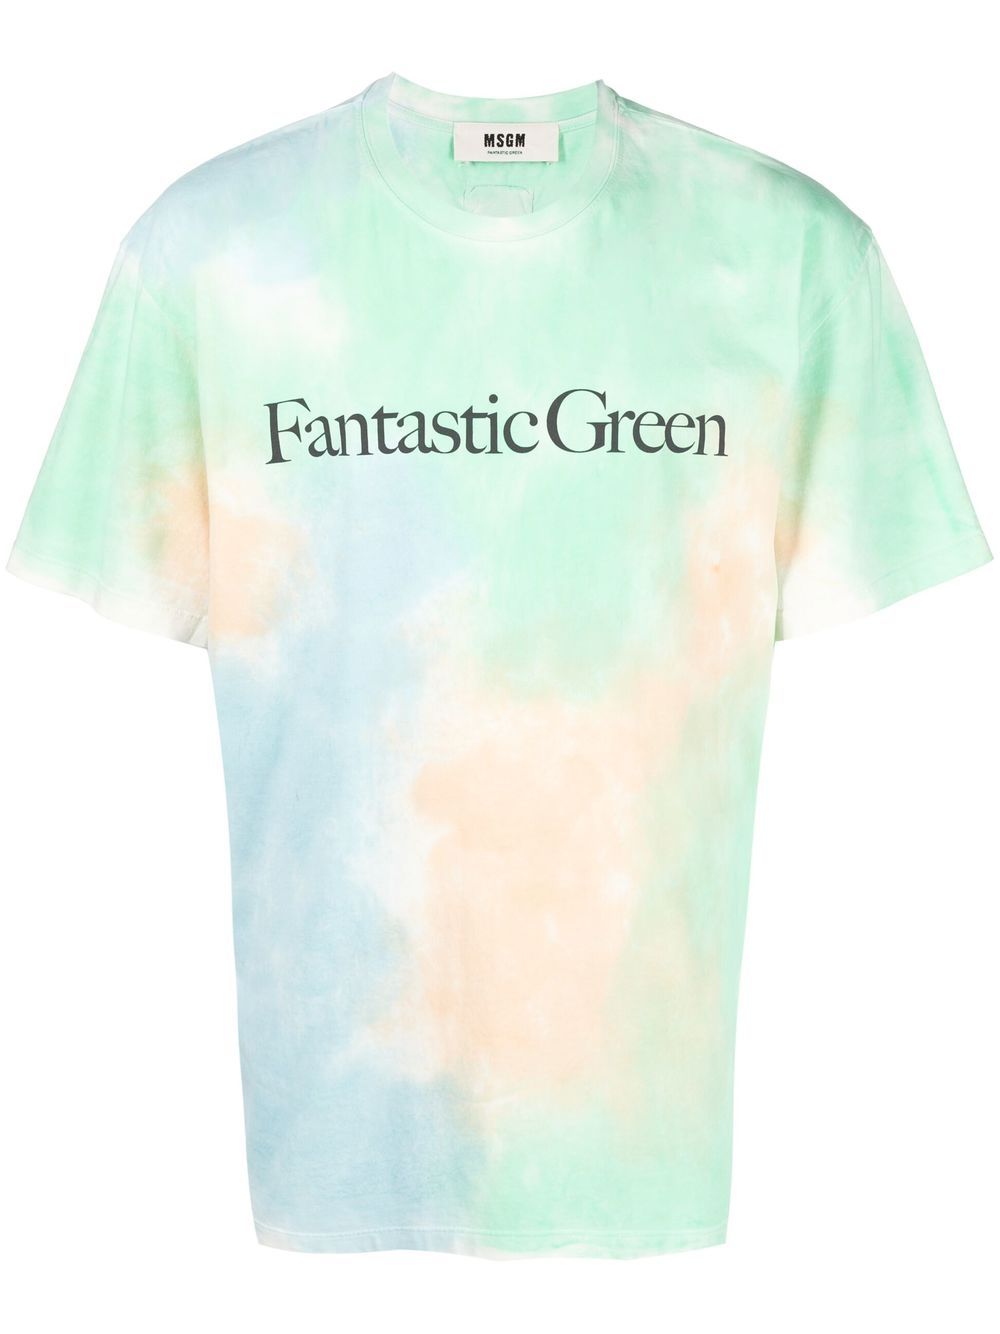 MSGM Fantastic Green T-Shirt - Grün von MSGM